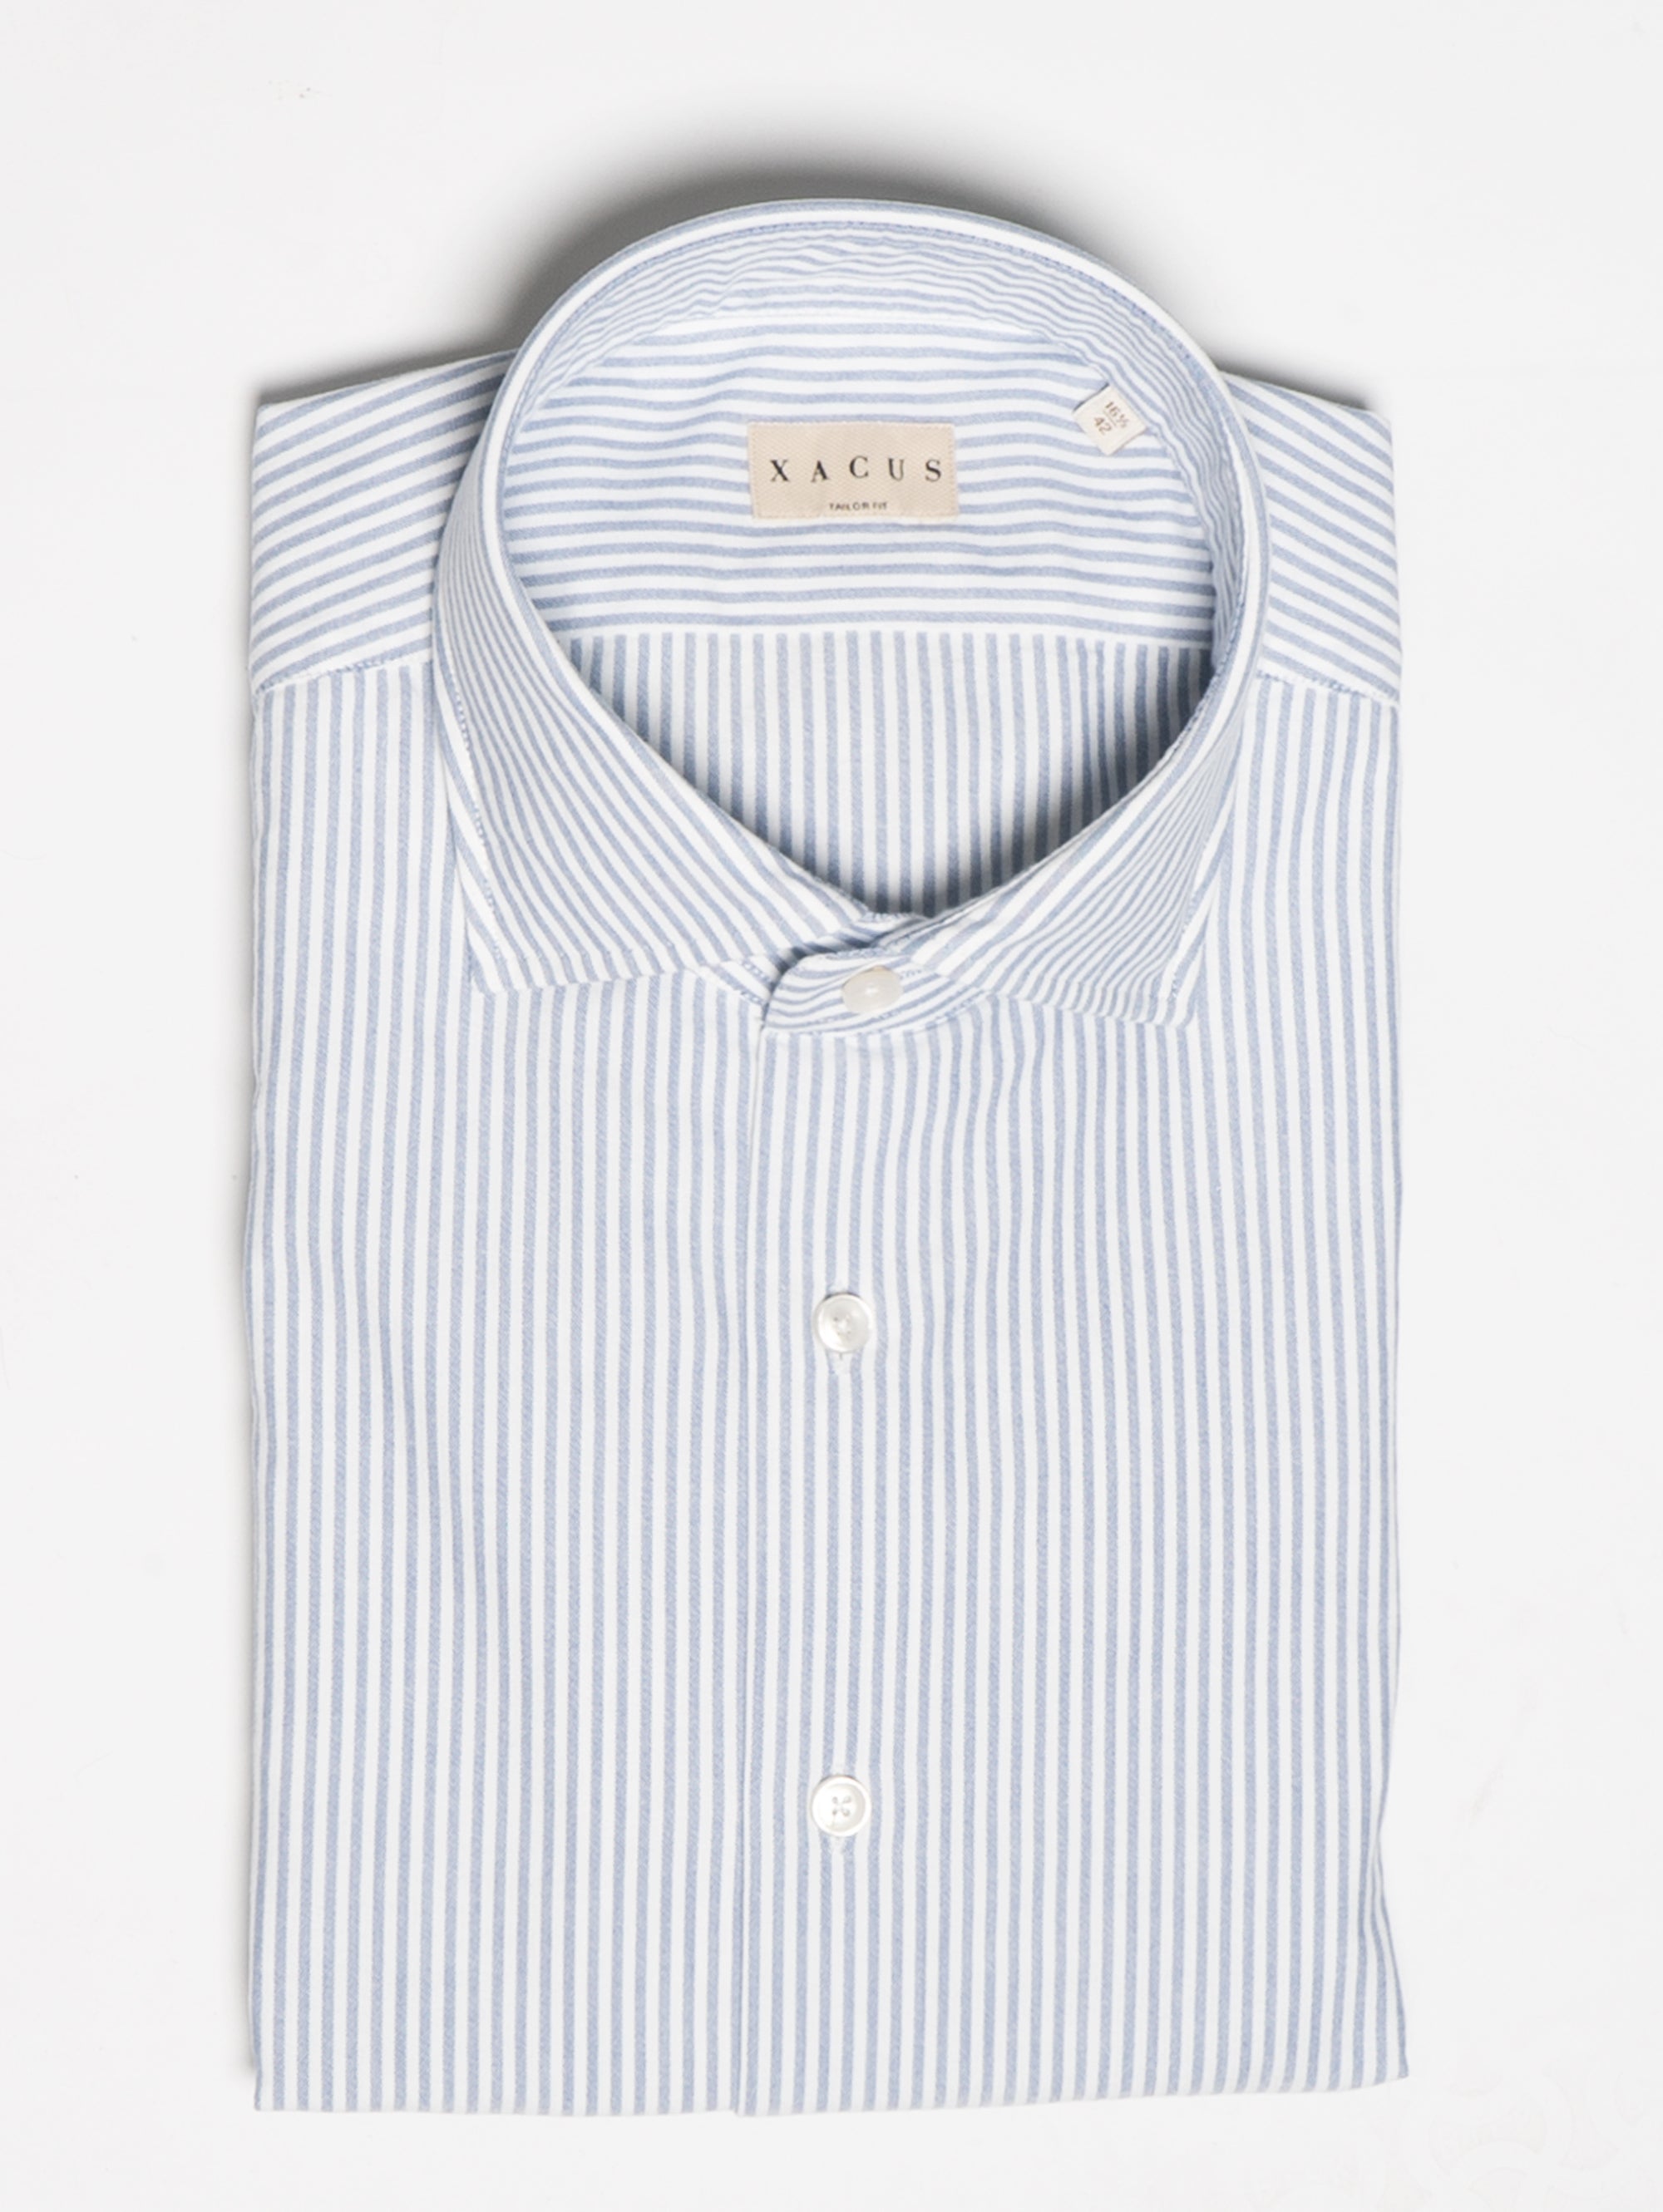 XACUS-Camicia in Cotone Oxford a Righe Bianco/Blu-TRYME Shop